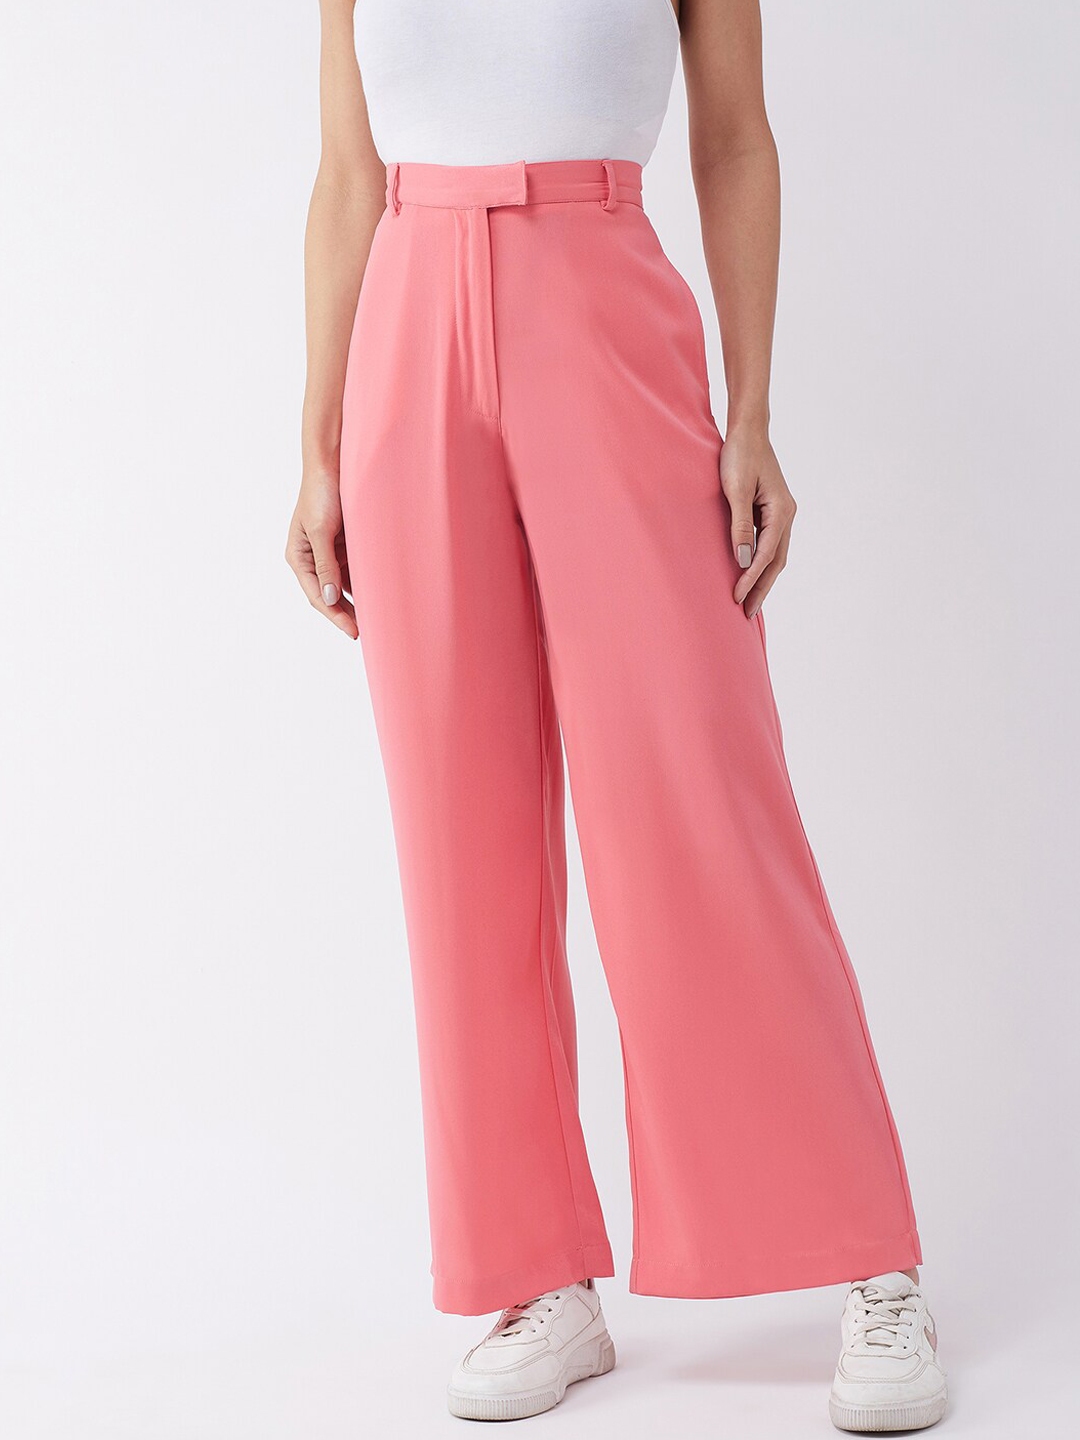 Athena Slim Fit Women Pink Trousers  Buy Athena Slim Fit Women Pink  Trousers Online at Best Prices in India  Flipkartcom